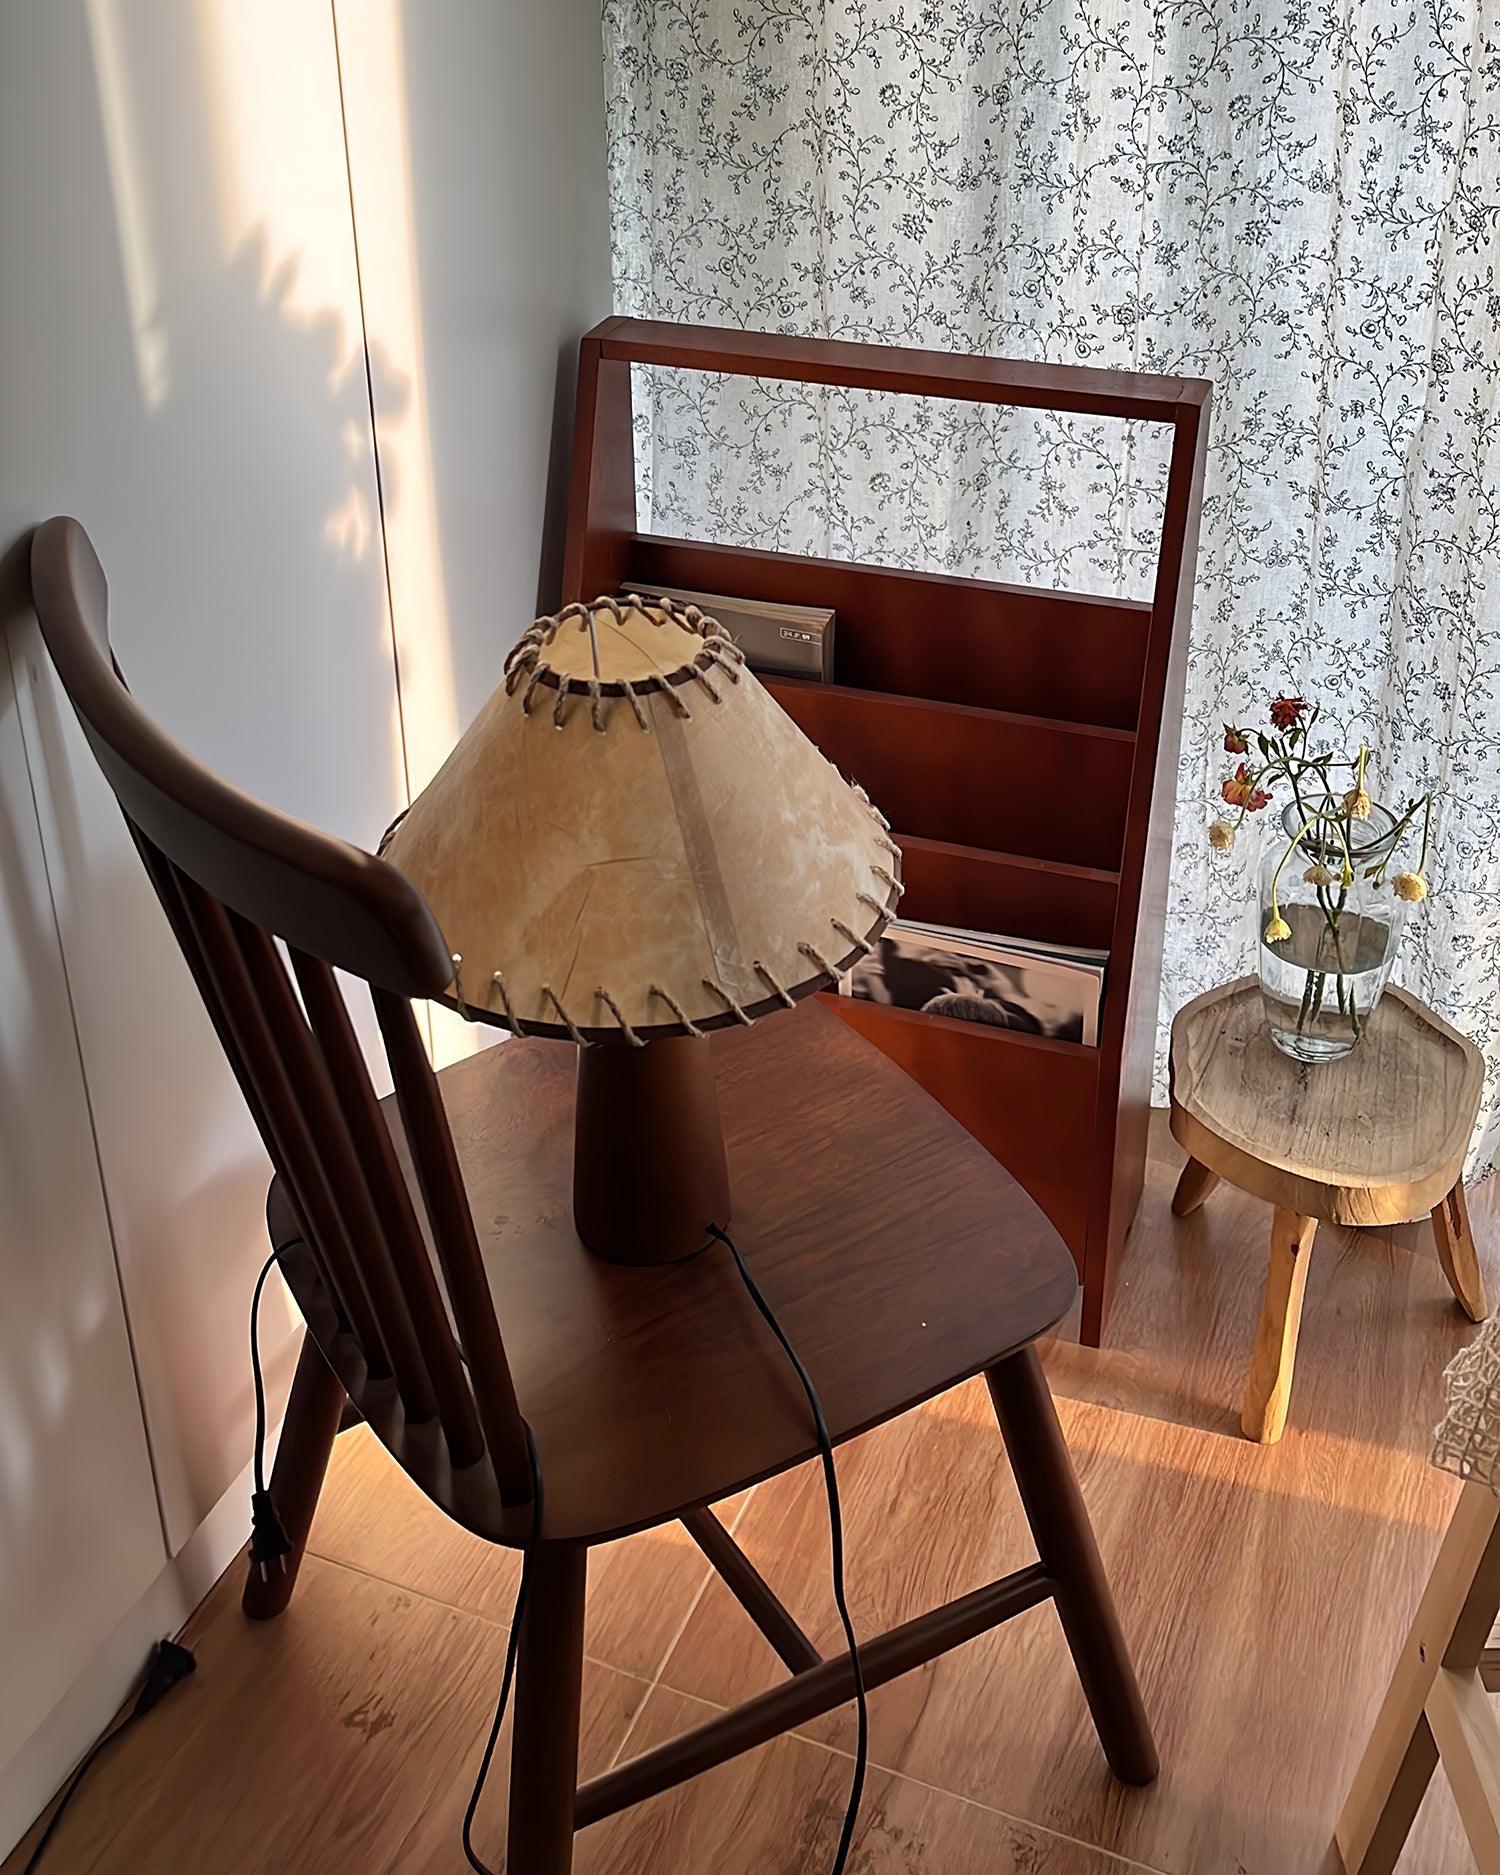 Kibo Wood Table Lamp 15.7″ - Docos